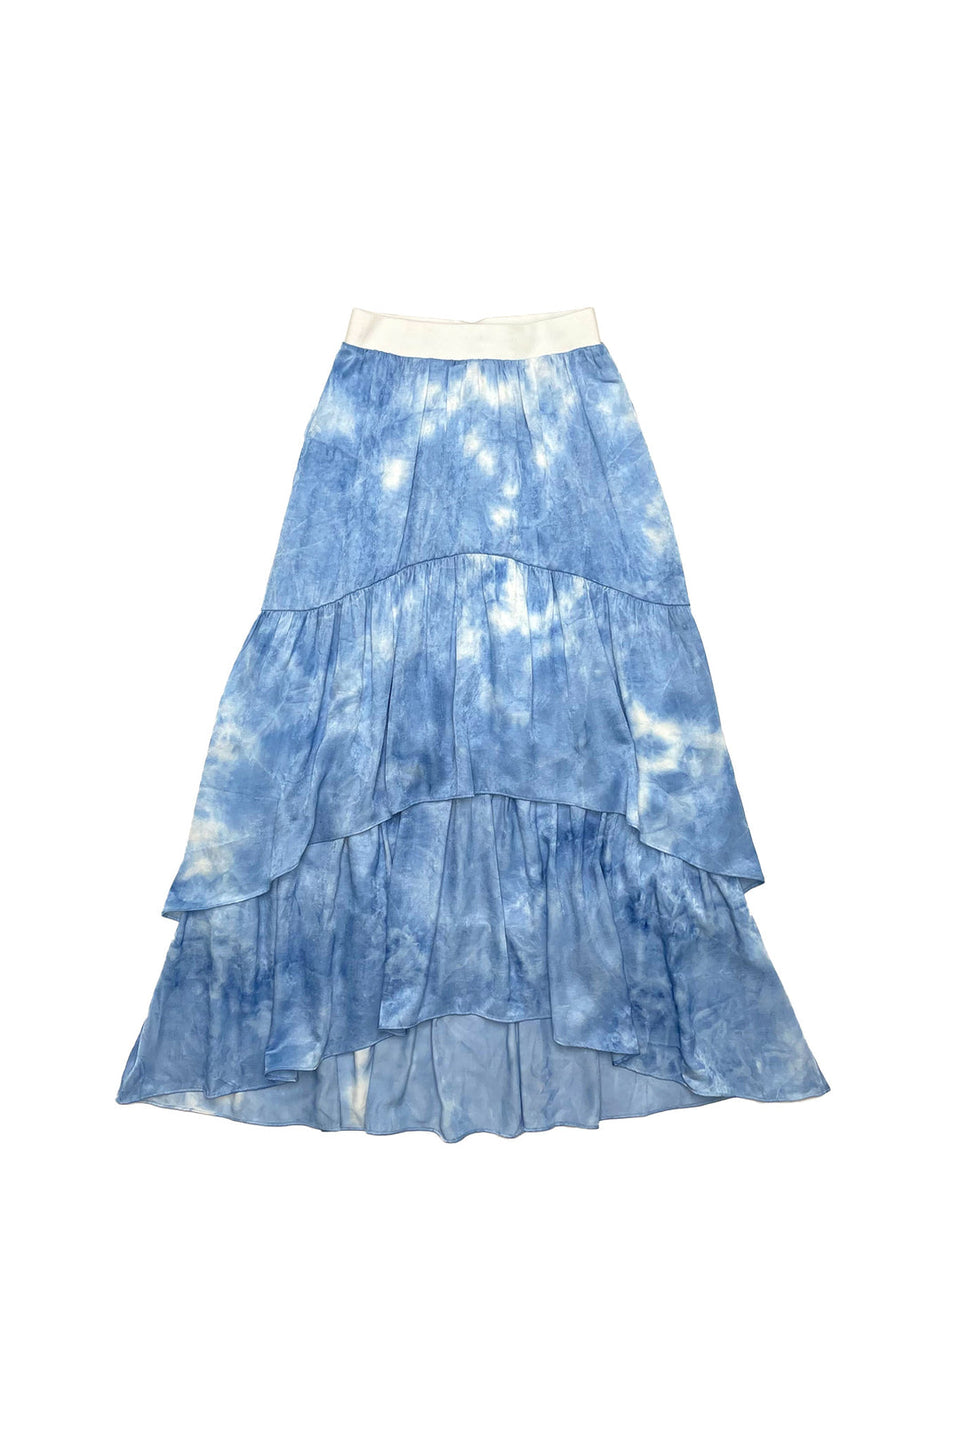 Zaikamoya Marble Wash Layered Skirt